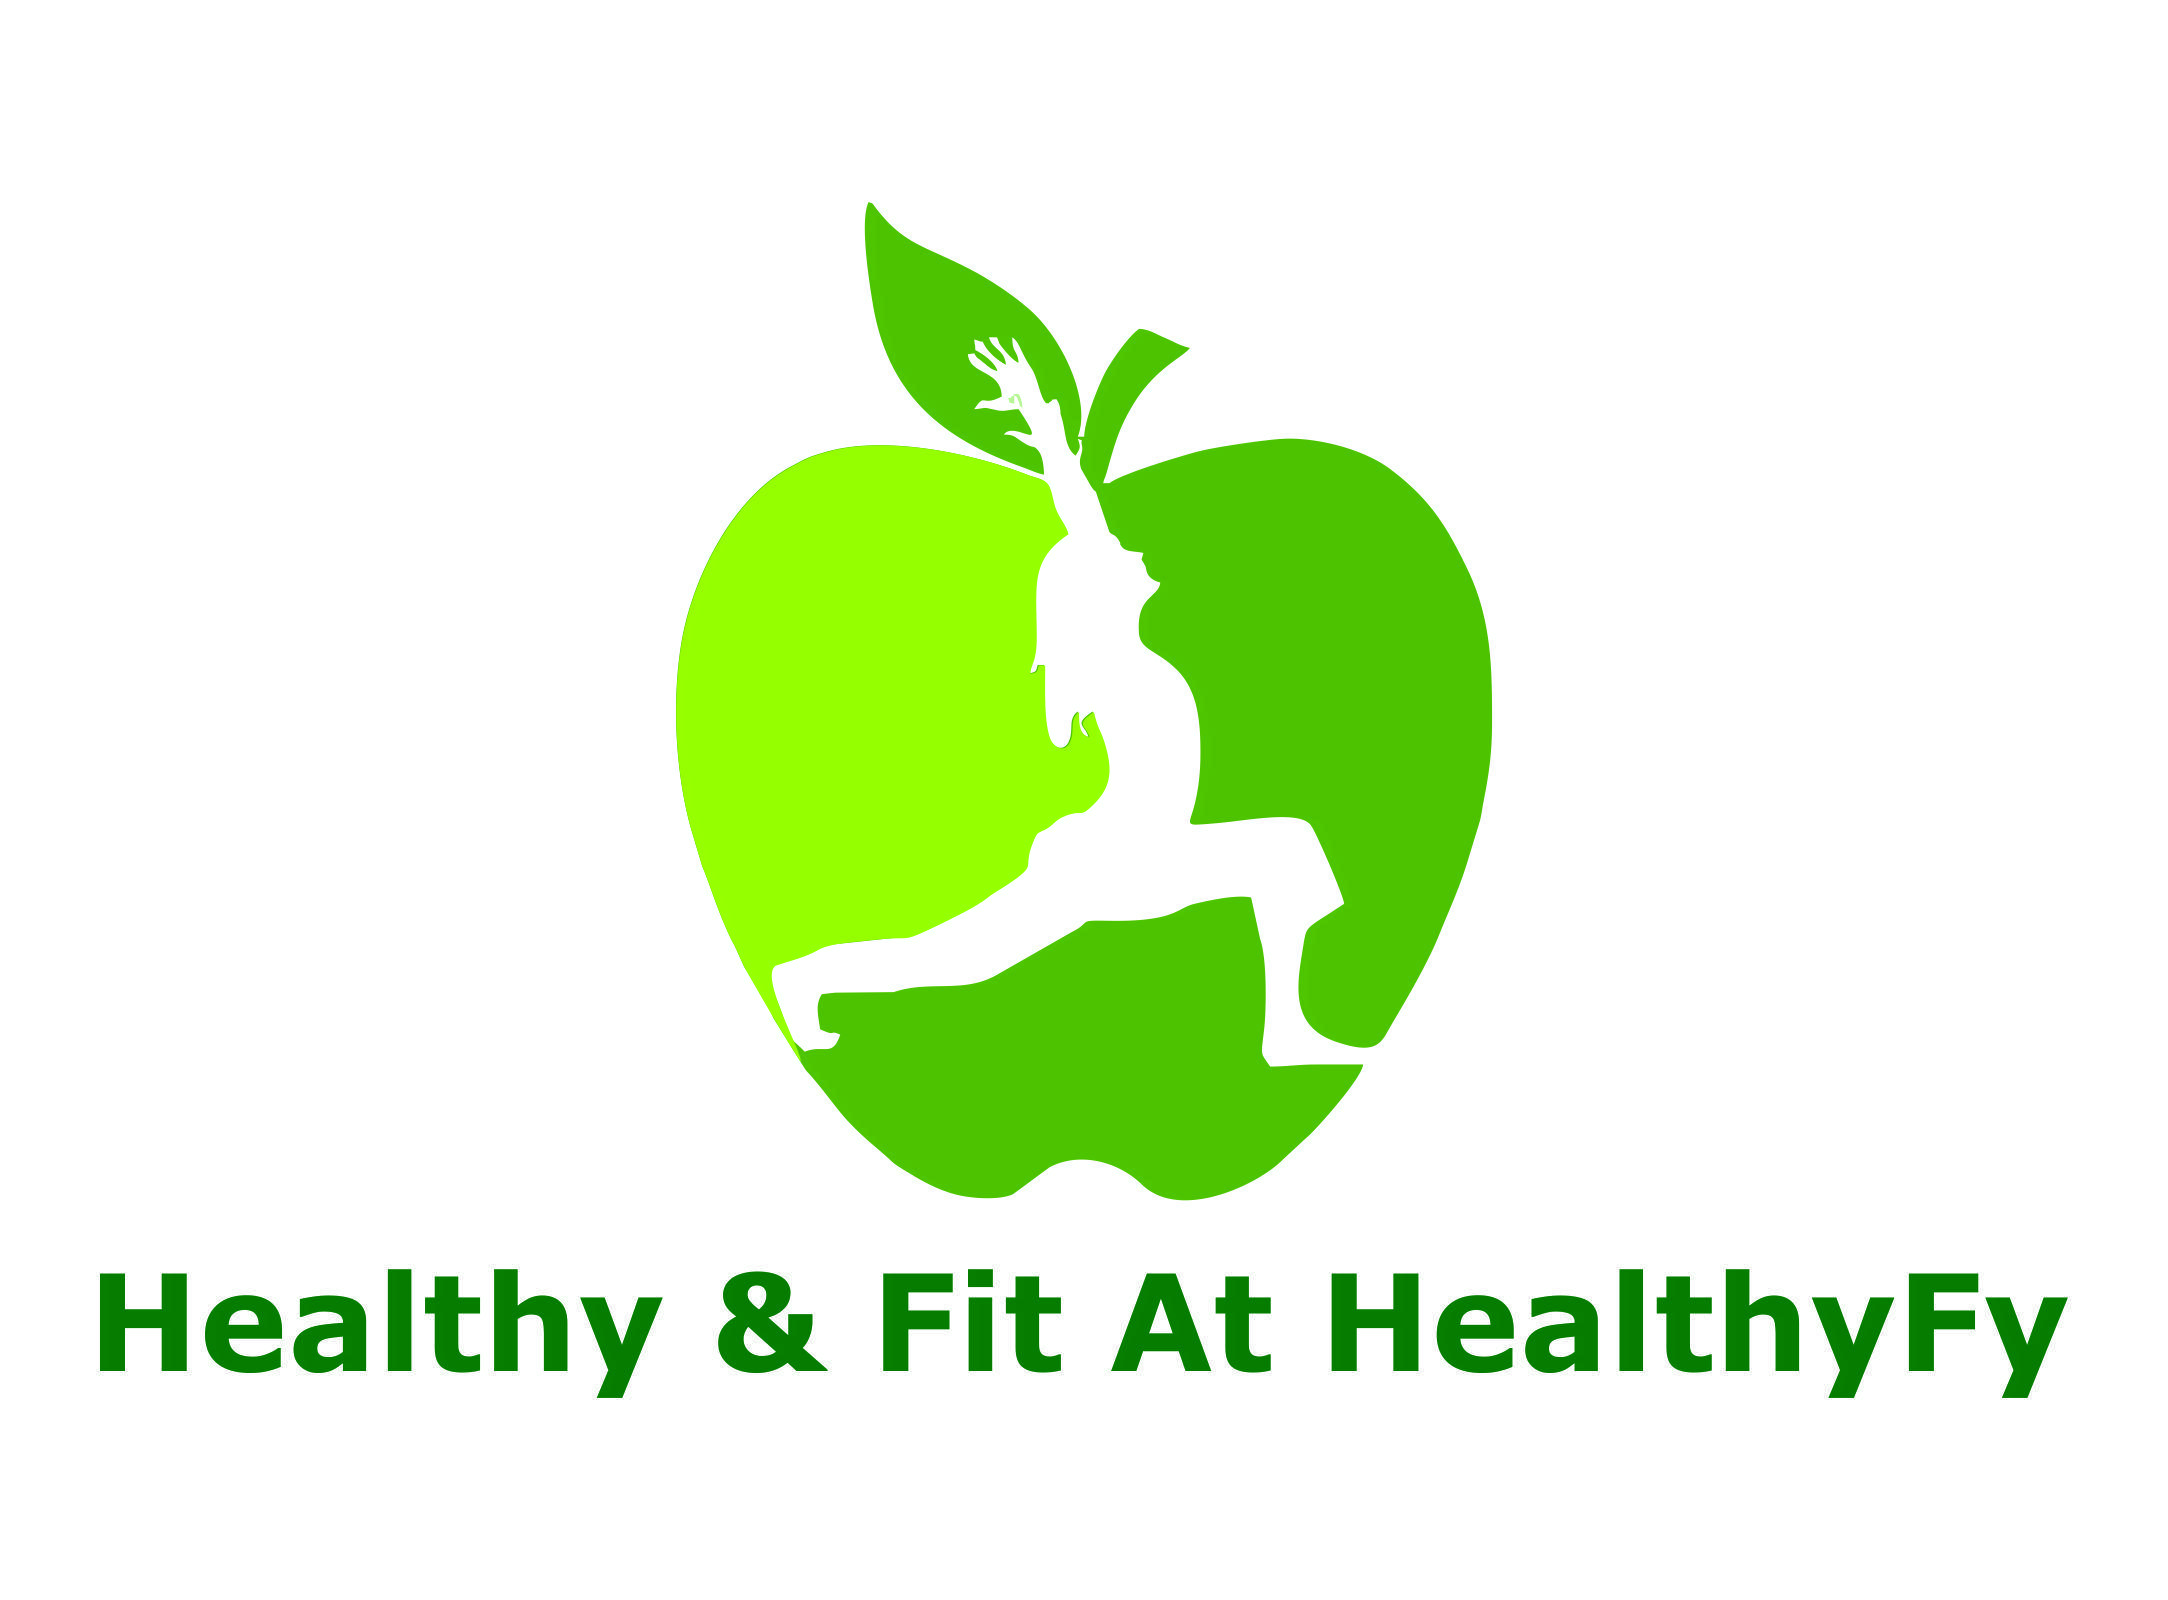 Diet Logo - Healthyfy Nutrition Centre Diet And Wellness Clinic, Dietitian